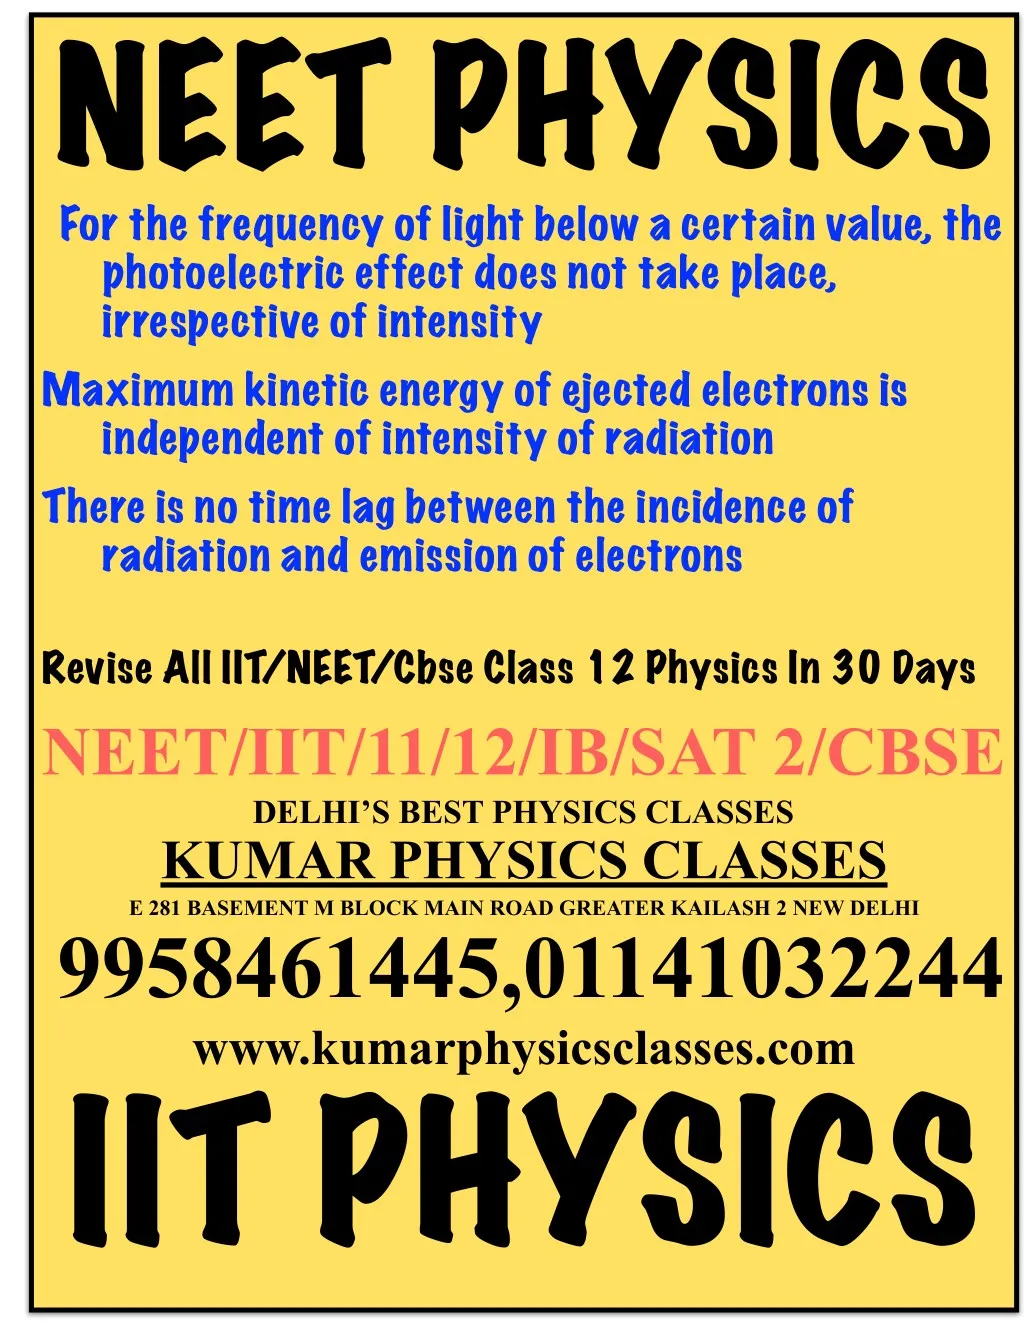 neet mcq s from kumar physics classes